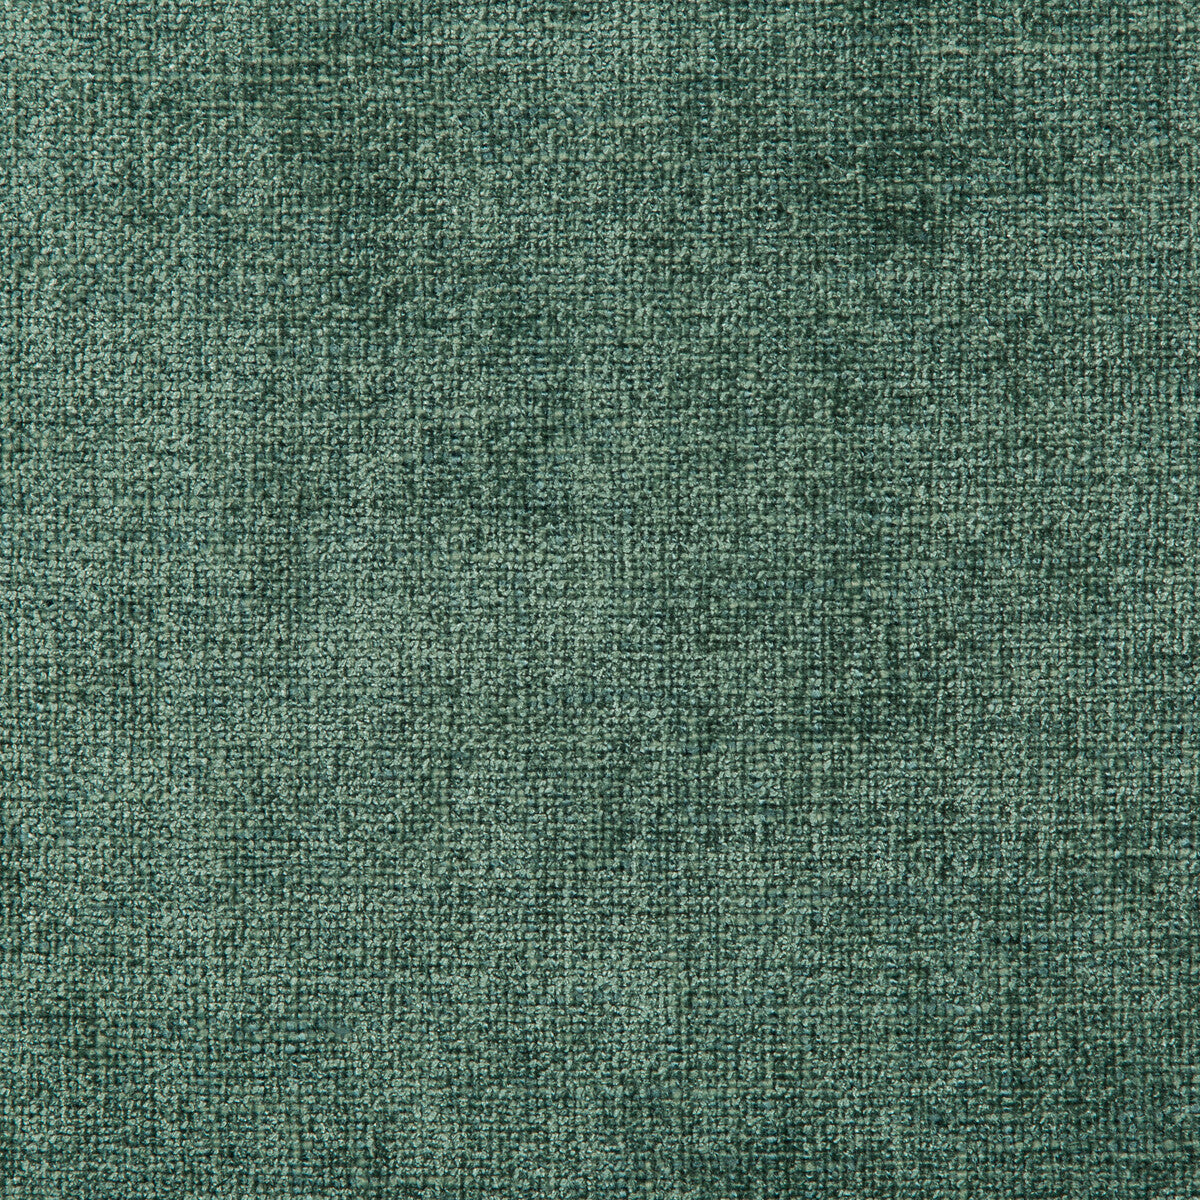 Kravet Smart fabric in 34293-30 color - pattern 34293.30.0 - by Kravet Smart